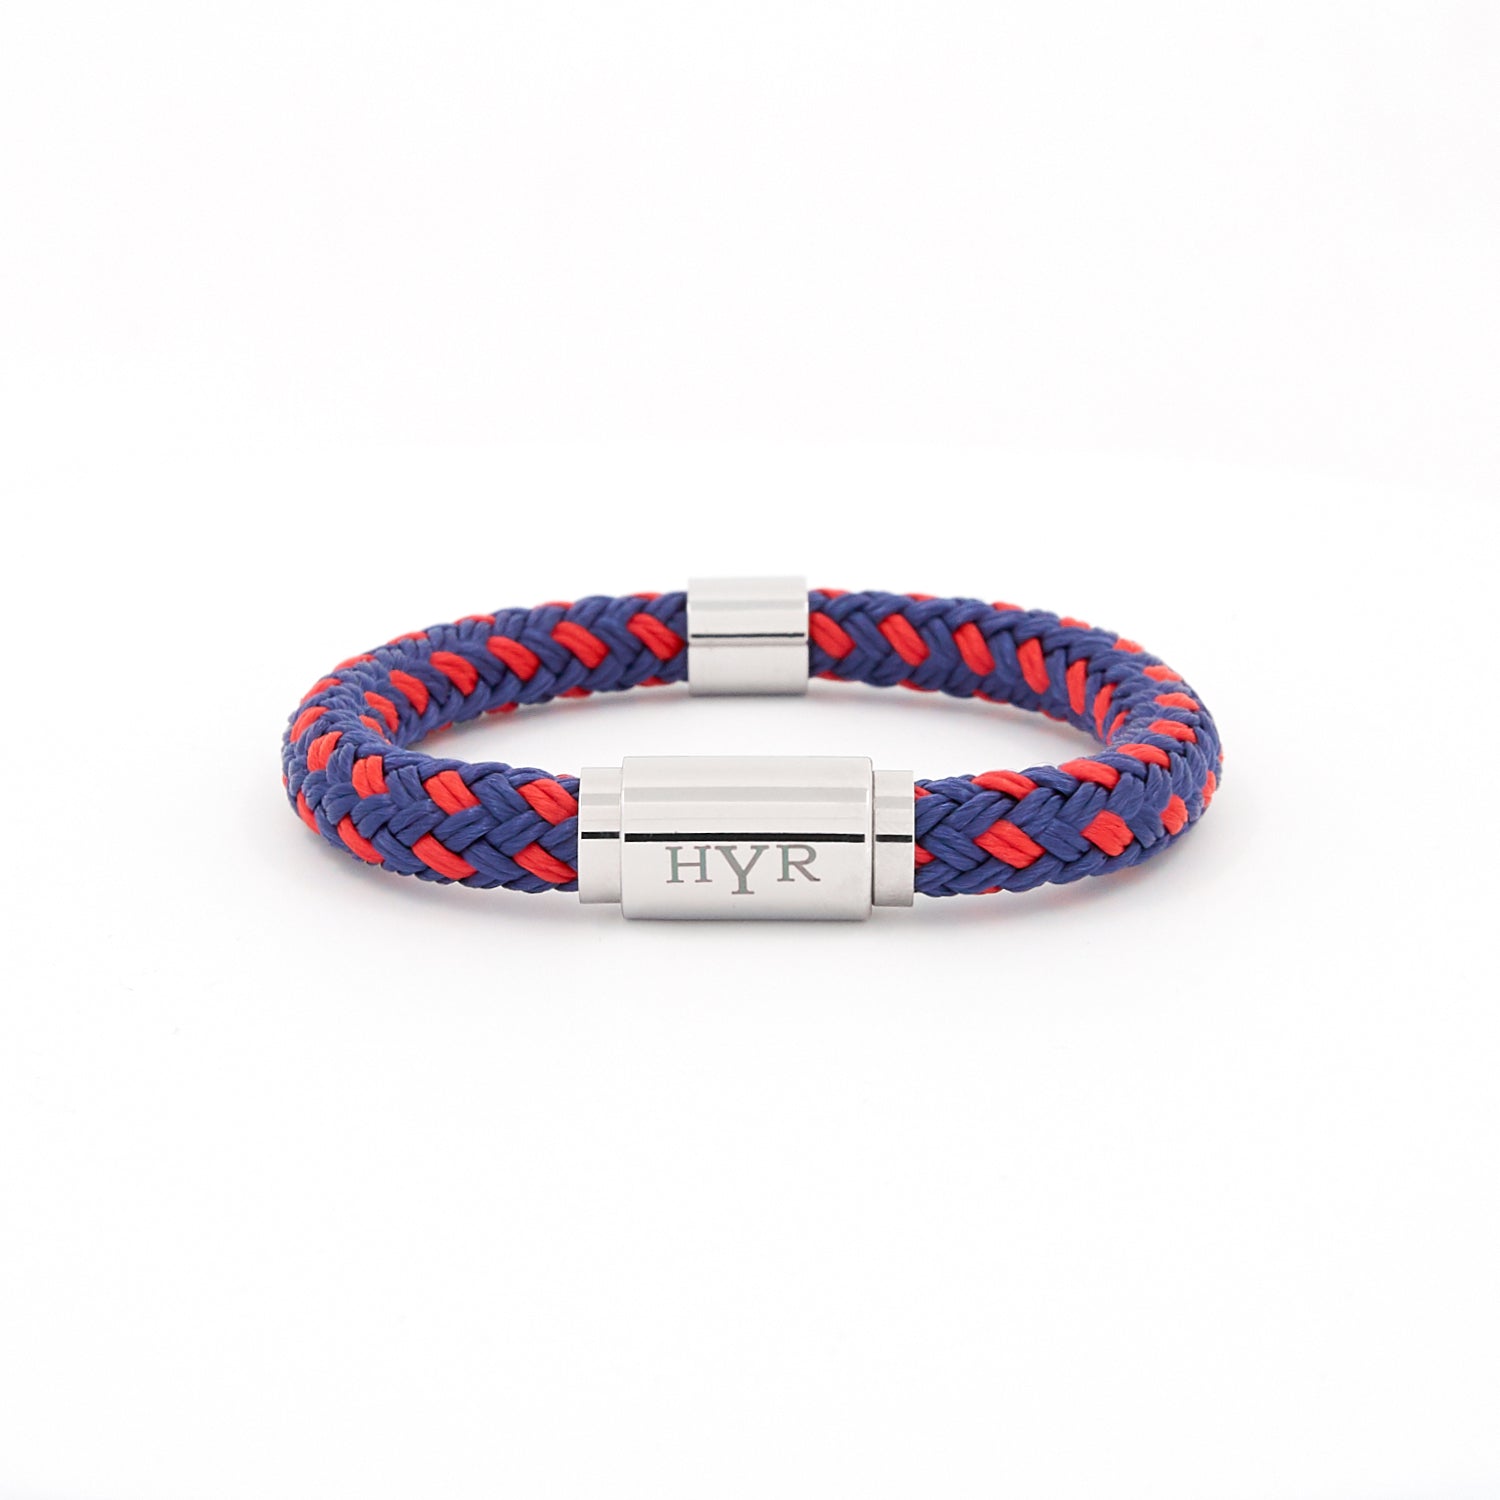 Red Navy Swirl rope bracelet - silver